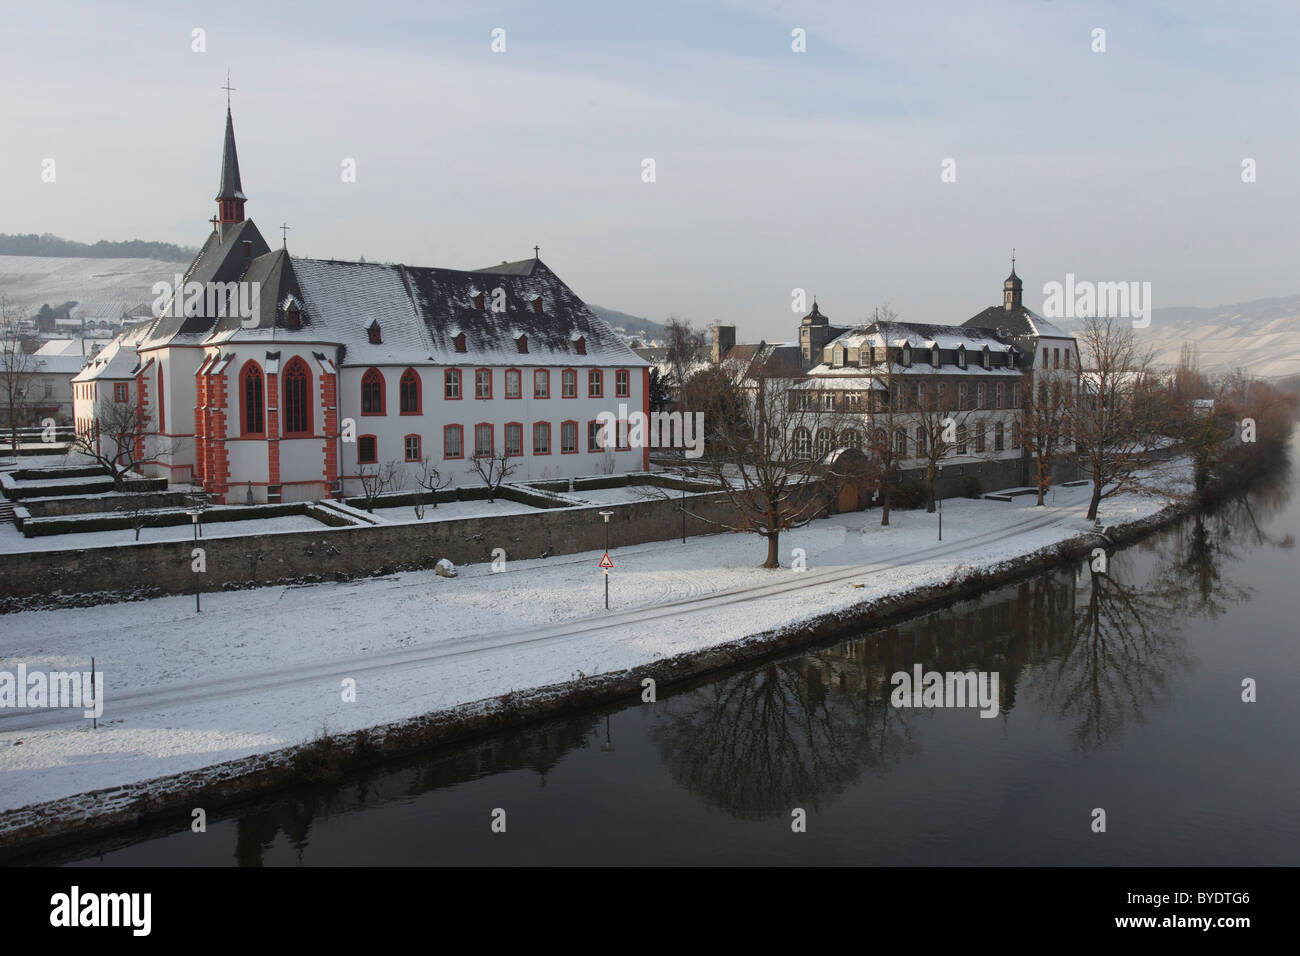 The Cusanusstift or St. Nikolaus-Hospital in winter, Bernkastel-Kues, Rhineland-Palatinate, Germany, Europe Stock Photo